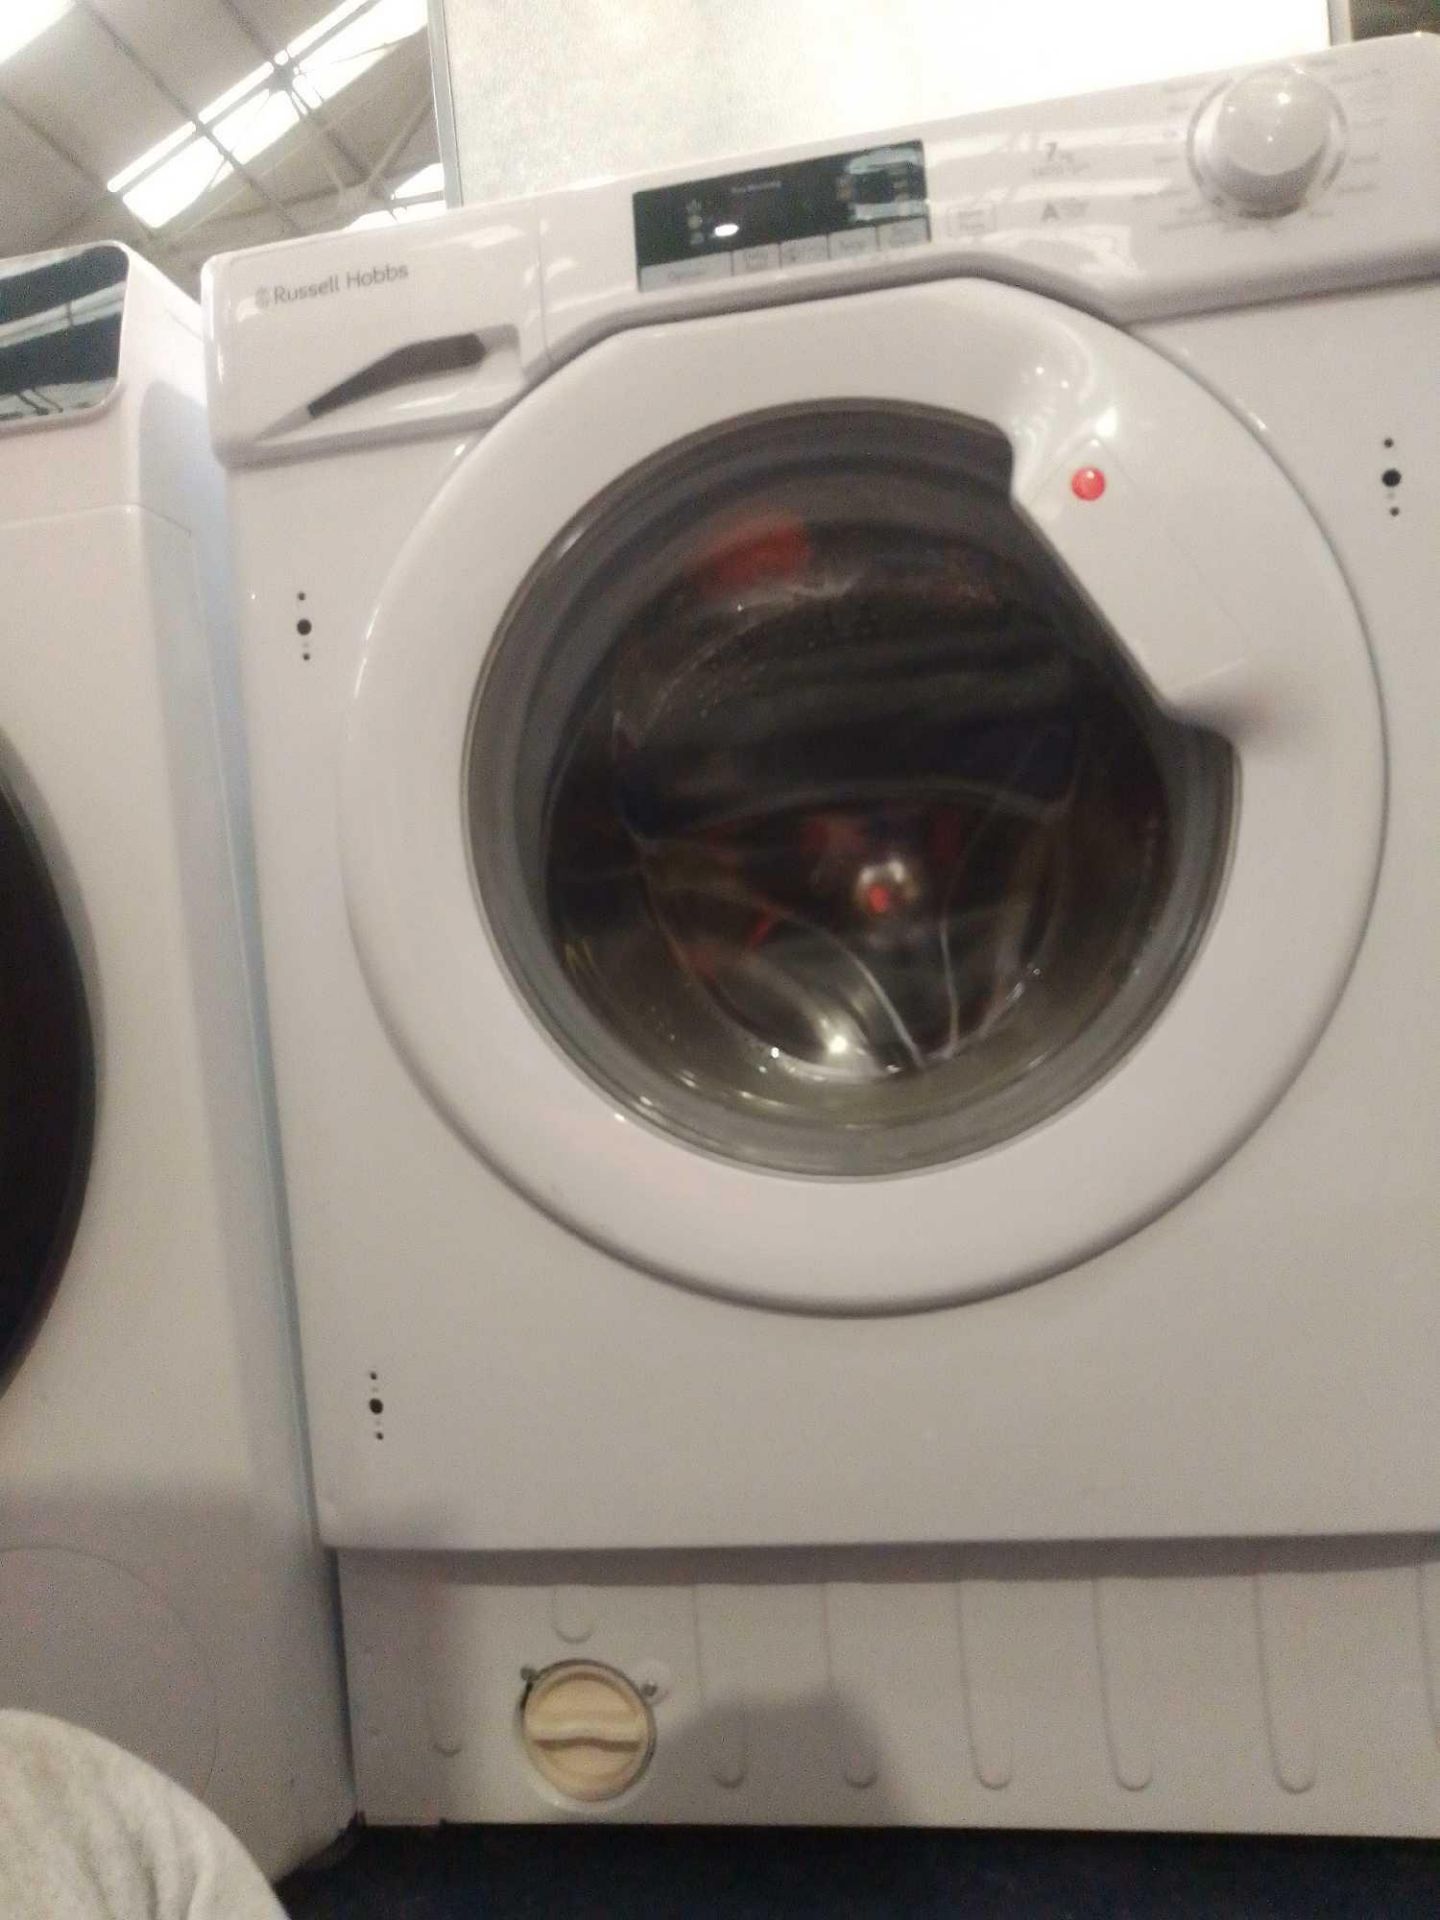 (Dd) RRP £350 Lot To Contain X 1 Russel Hobbs Washing Machine ( Rhbi1740Wm1 ) - Image 2 of 2